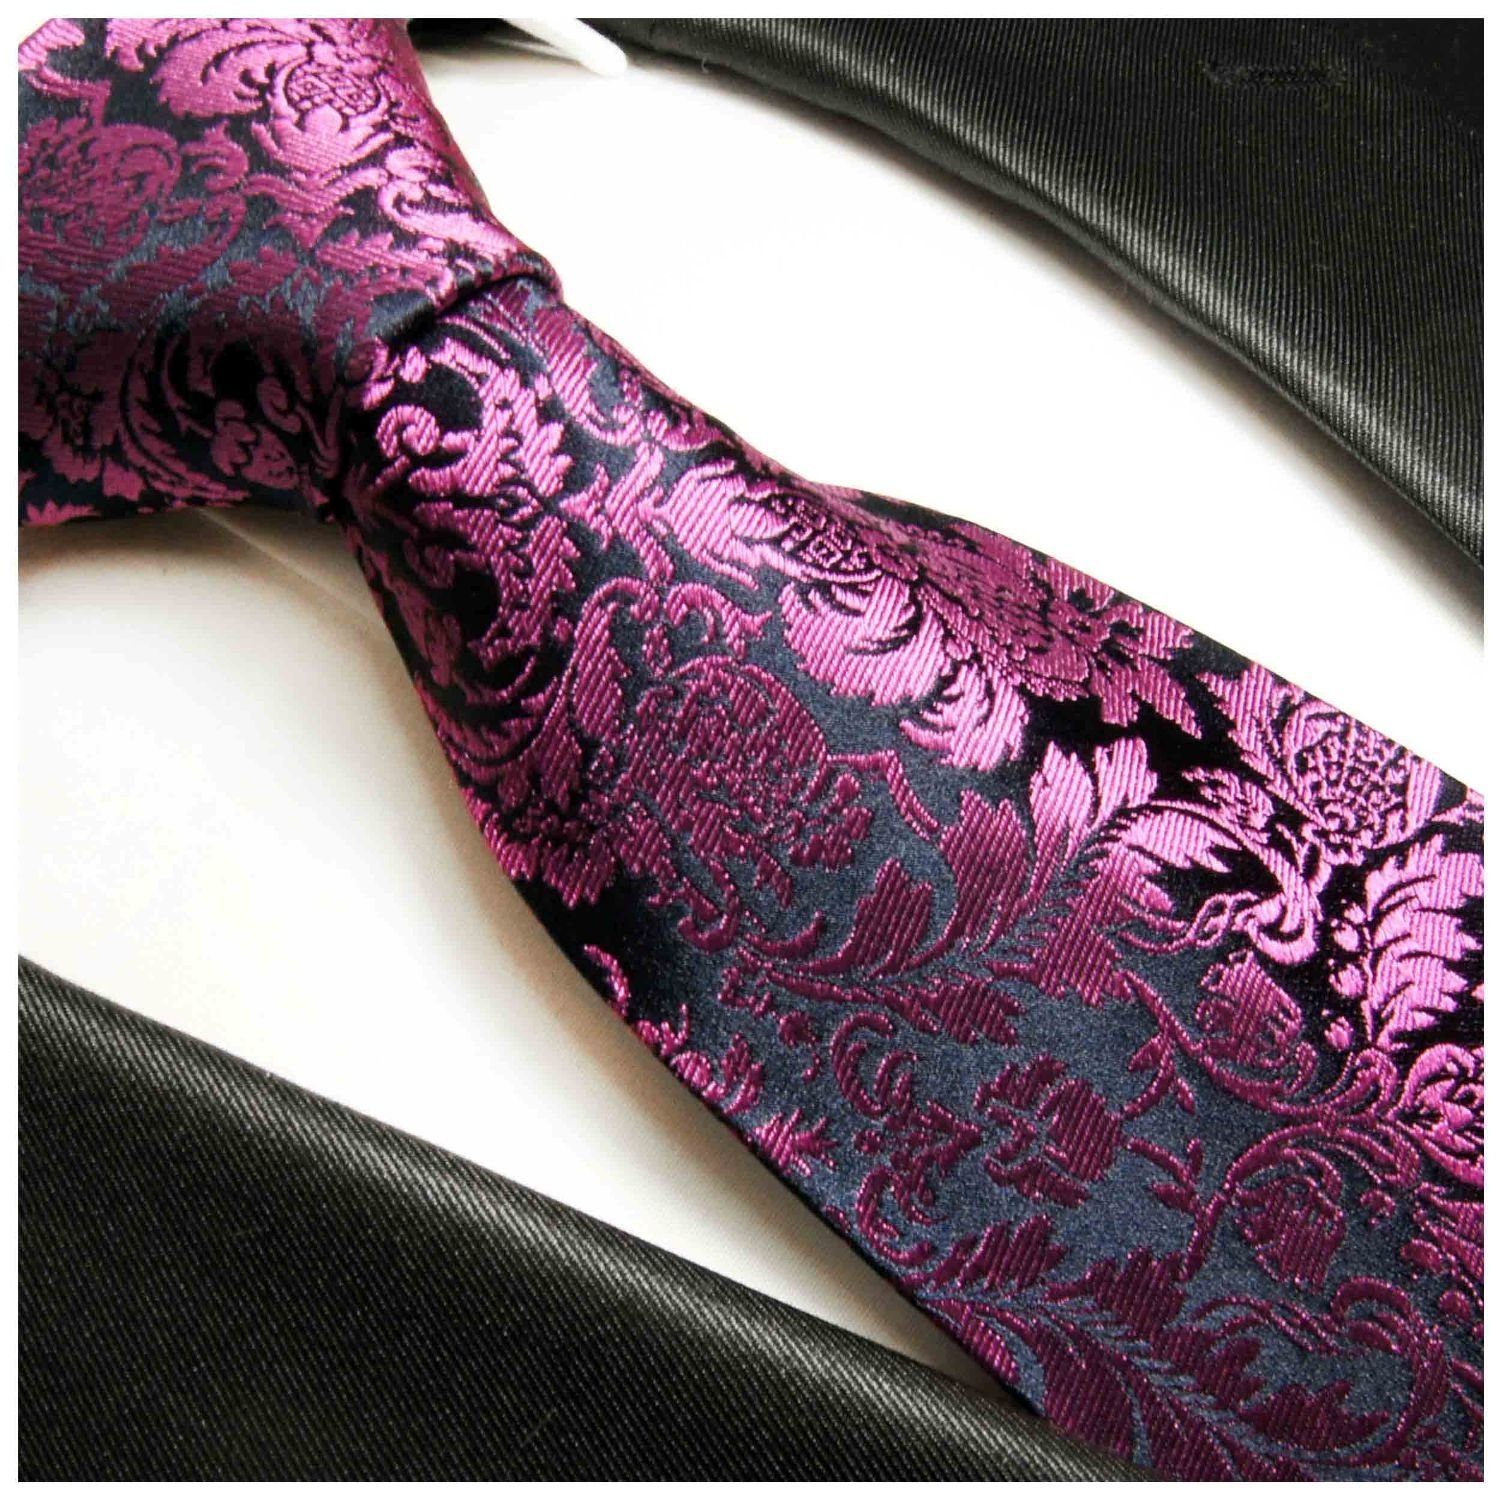 Herren Krawatten Paul Malone Krawatte Designer Seidenkrawatte Herren Schlips modern floral 100% Seide Schmal (6cm), pink blau 68